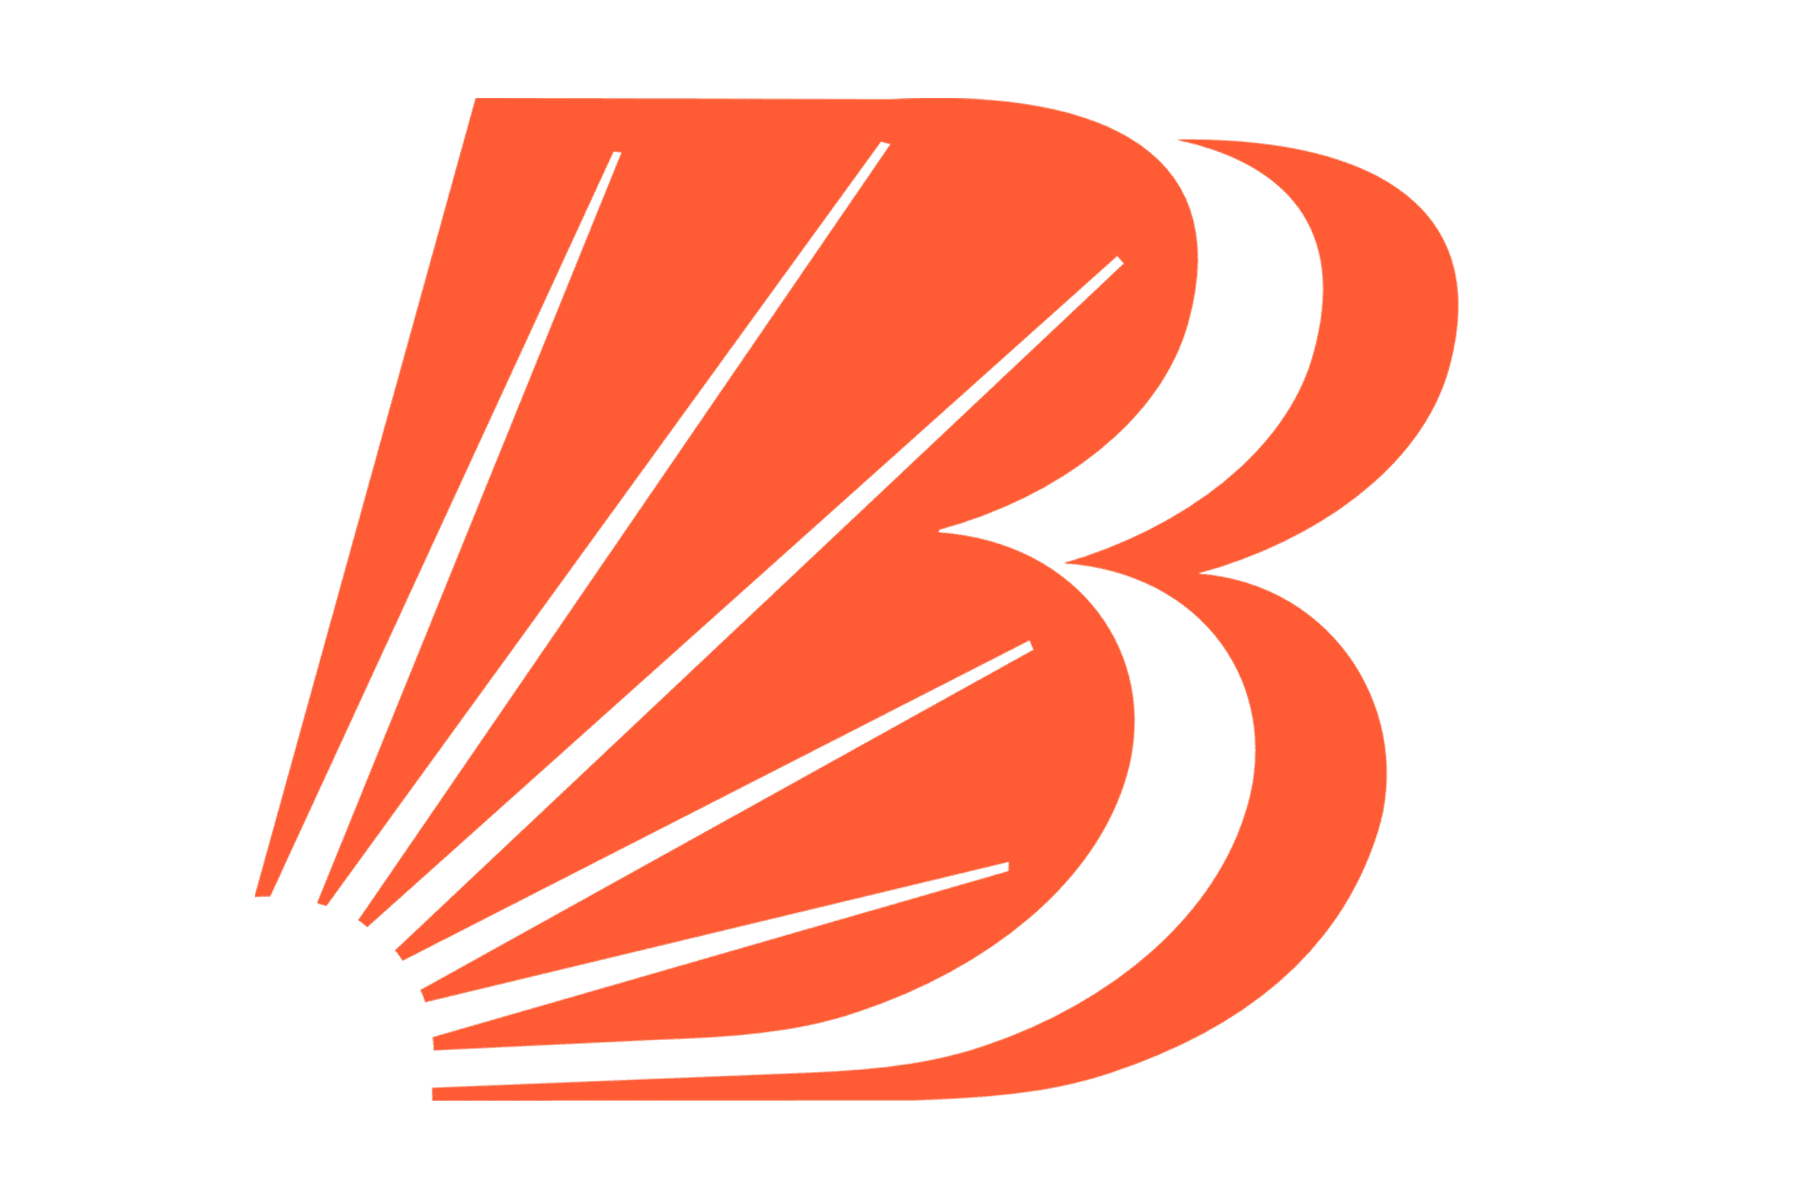 Bank of Baroda to Rationalize 800-900 Branches - Paisabazaar.com